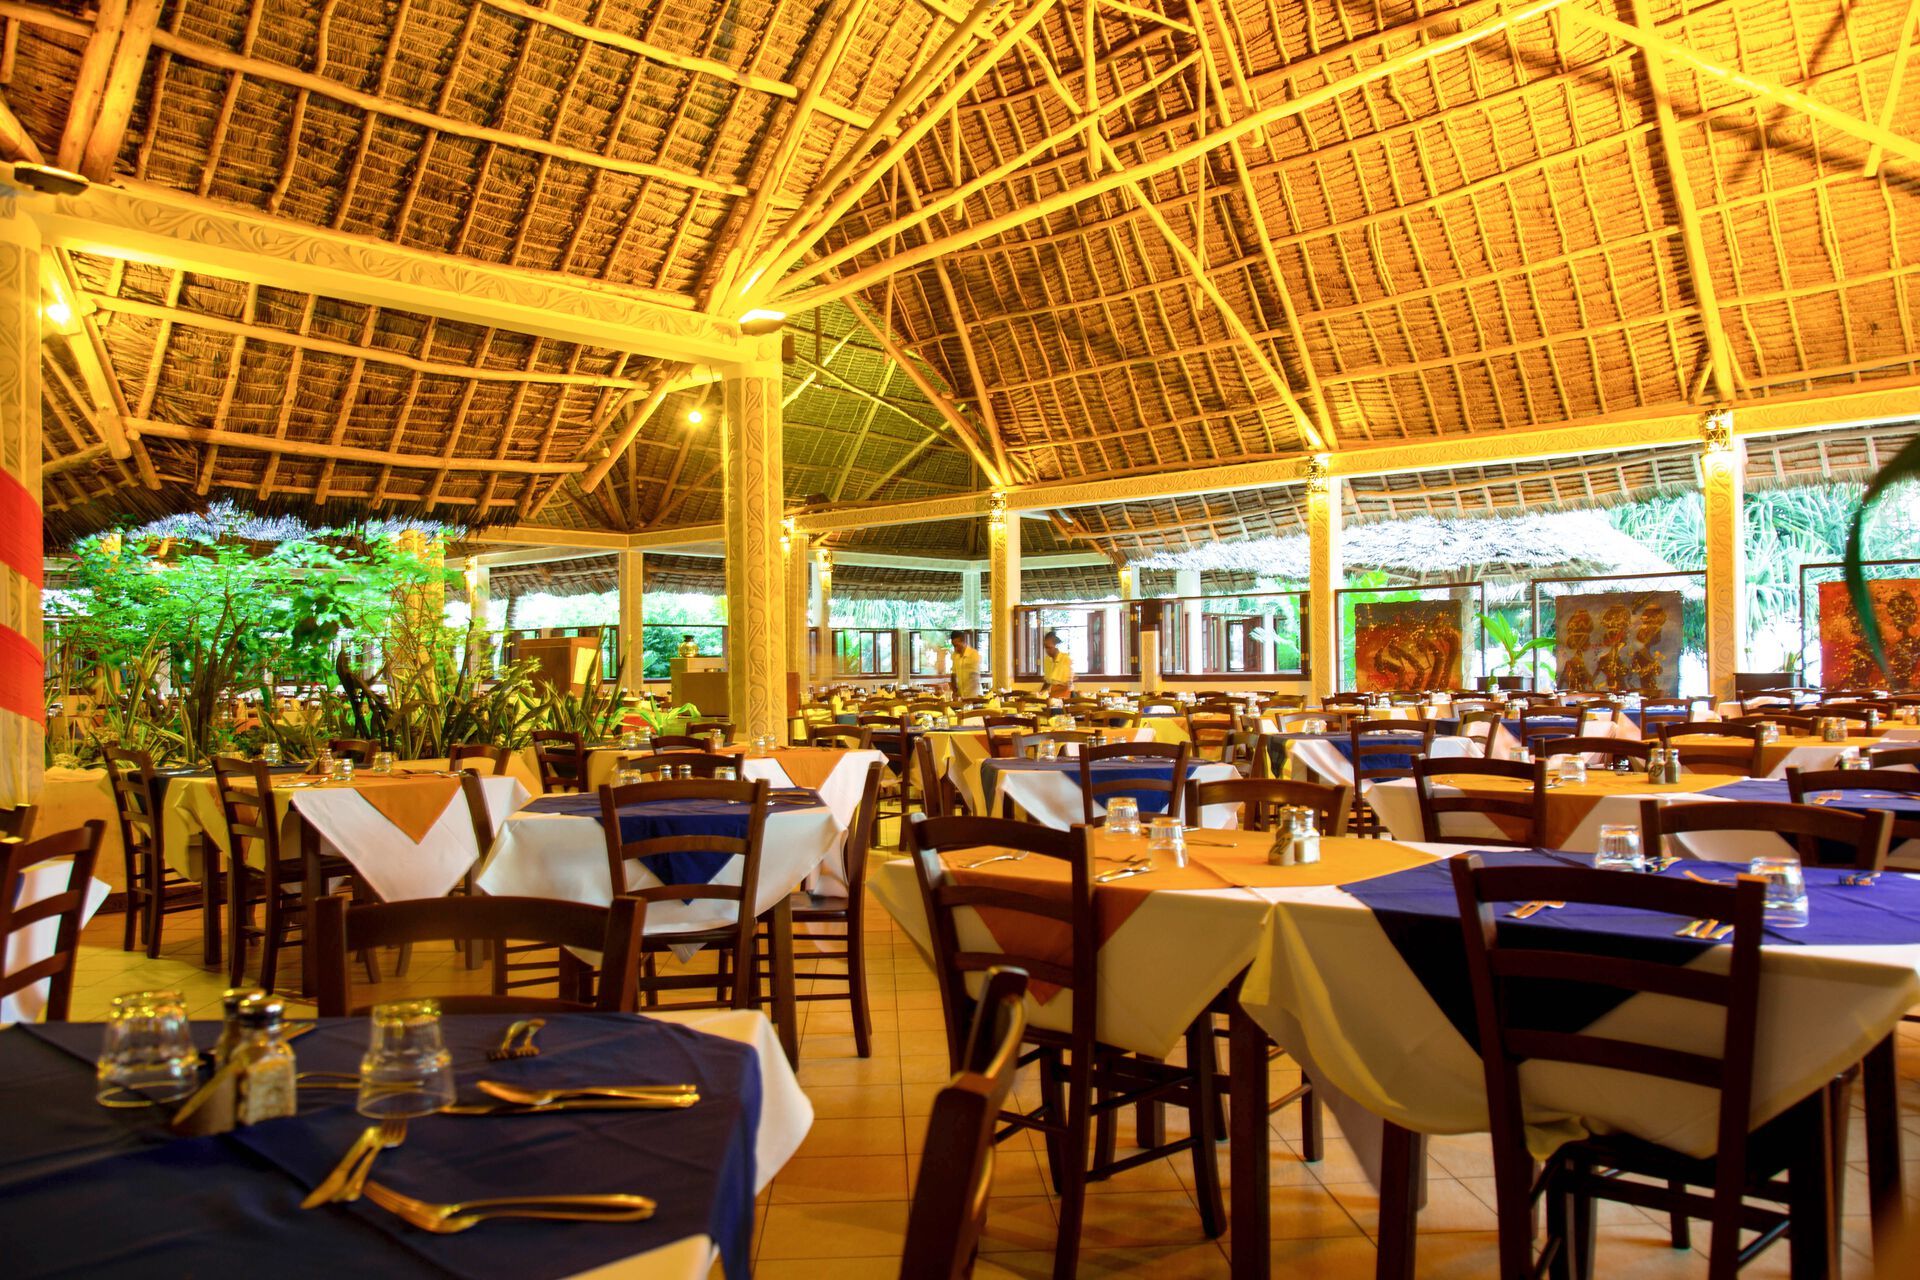 Tanzanie - Zanzibar - Hotel Uroa Bay Beach Resort 4*